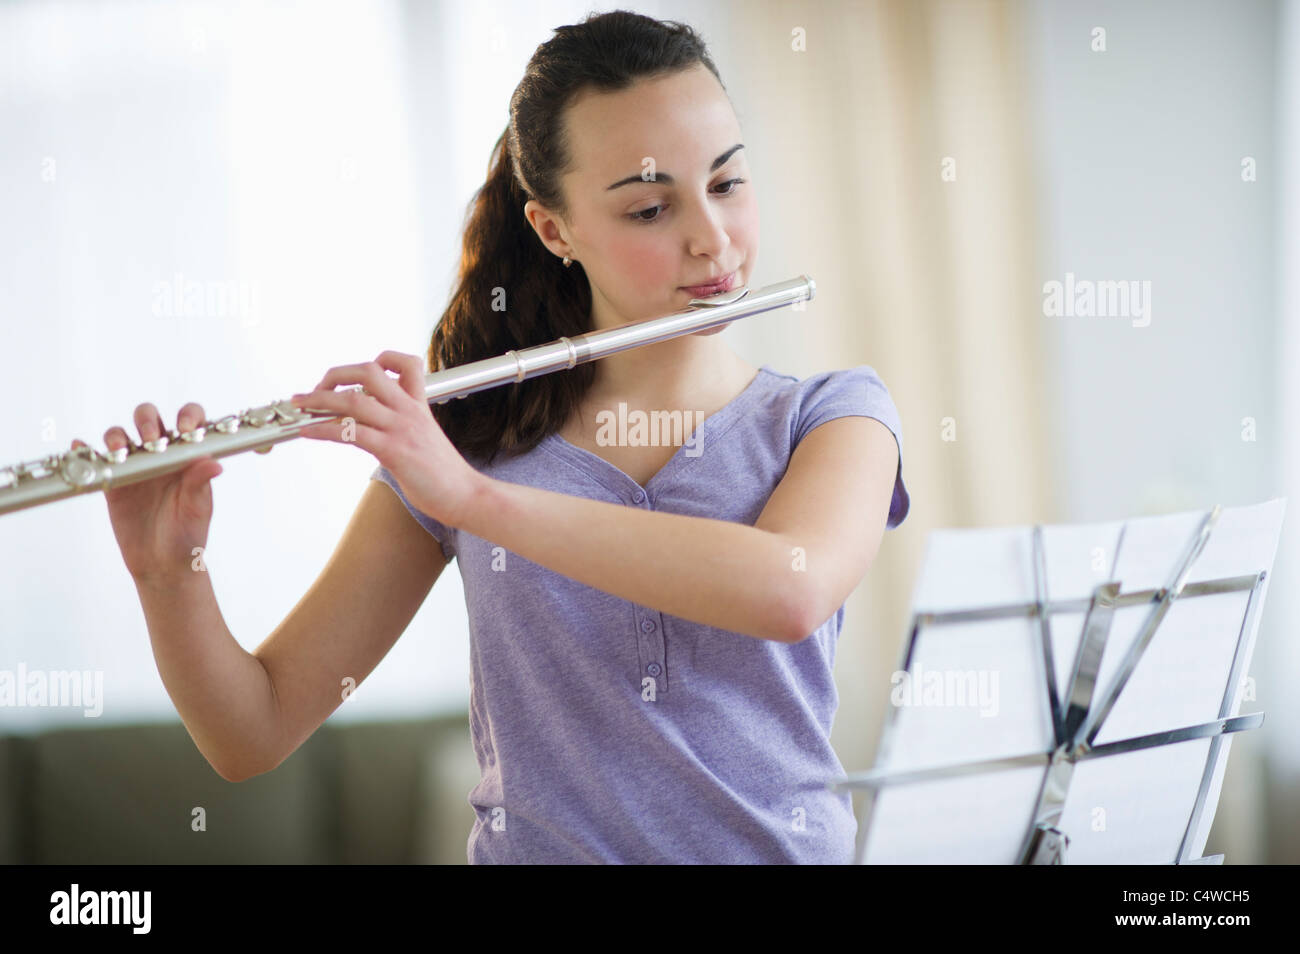 Playing flute. Женская рука на флейте. Девушка играет на флейте фото. Женщина с флейтой в профиль. Фото красивой девушки с флейтой.